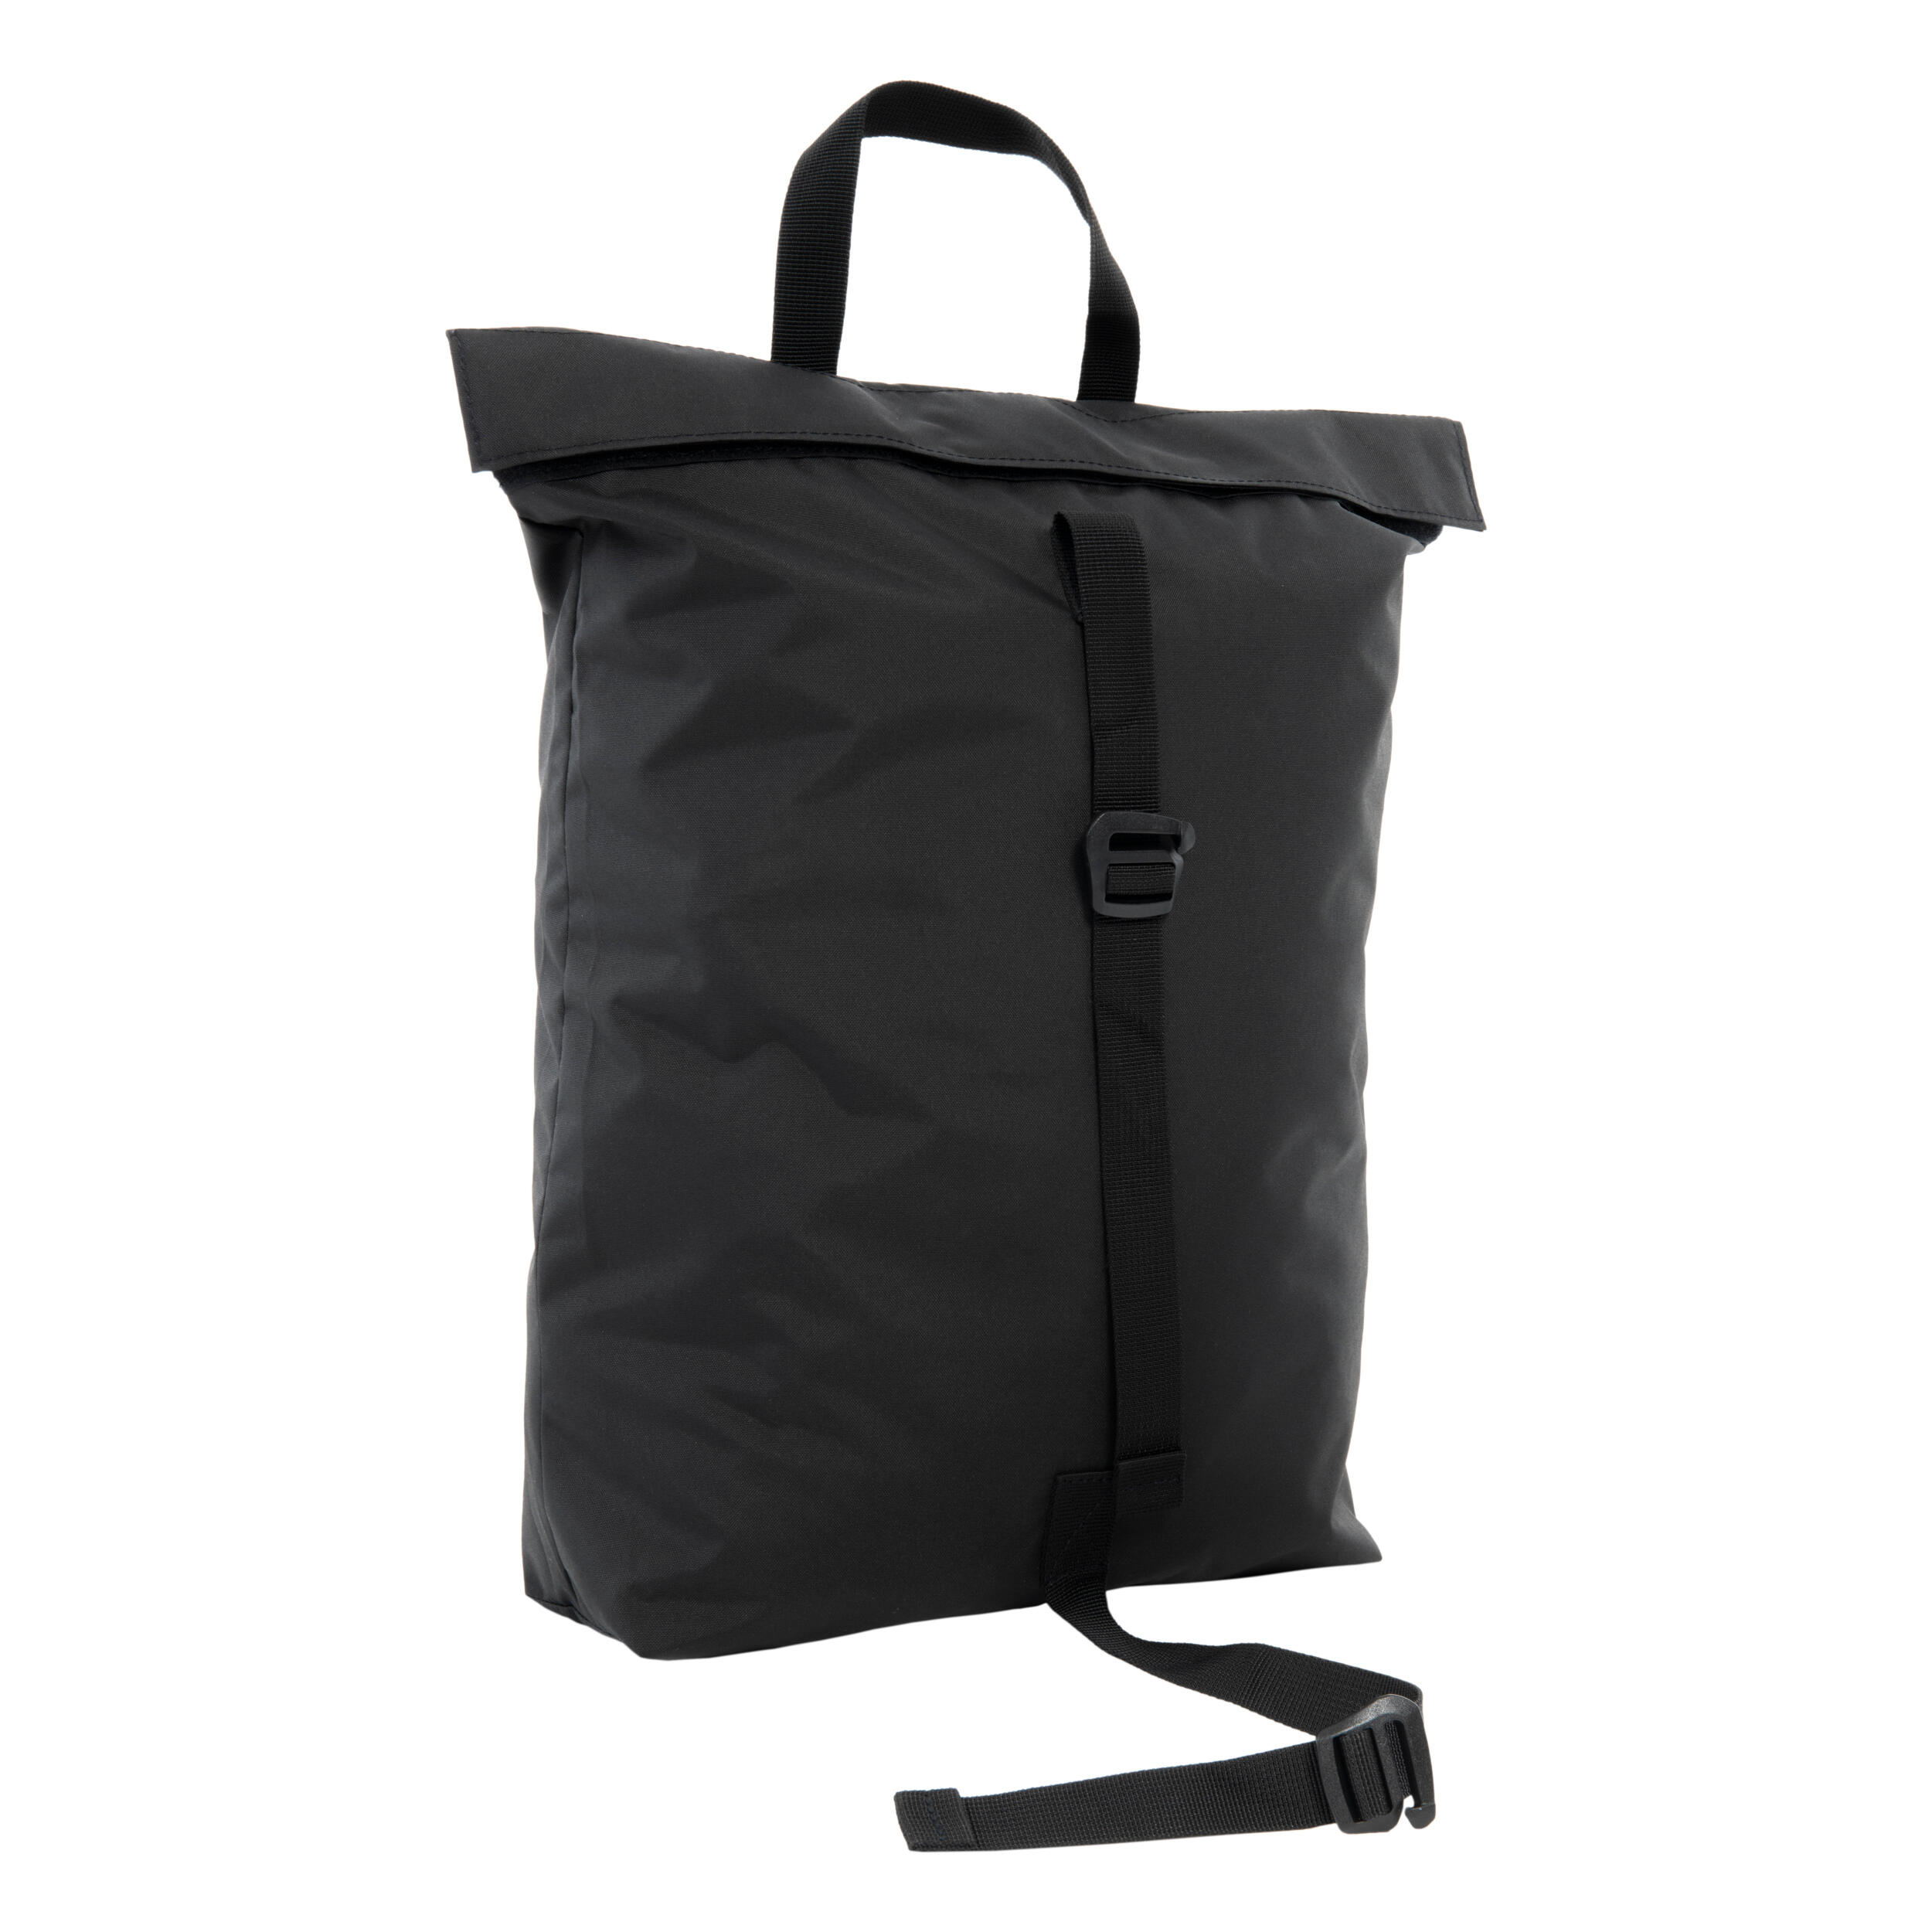 TARMAK Weighted Basketball Bag - B100 Box Ballast Bag